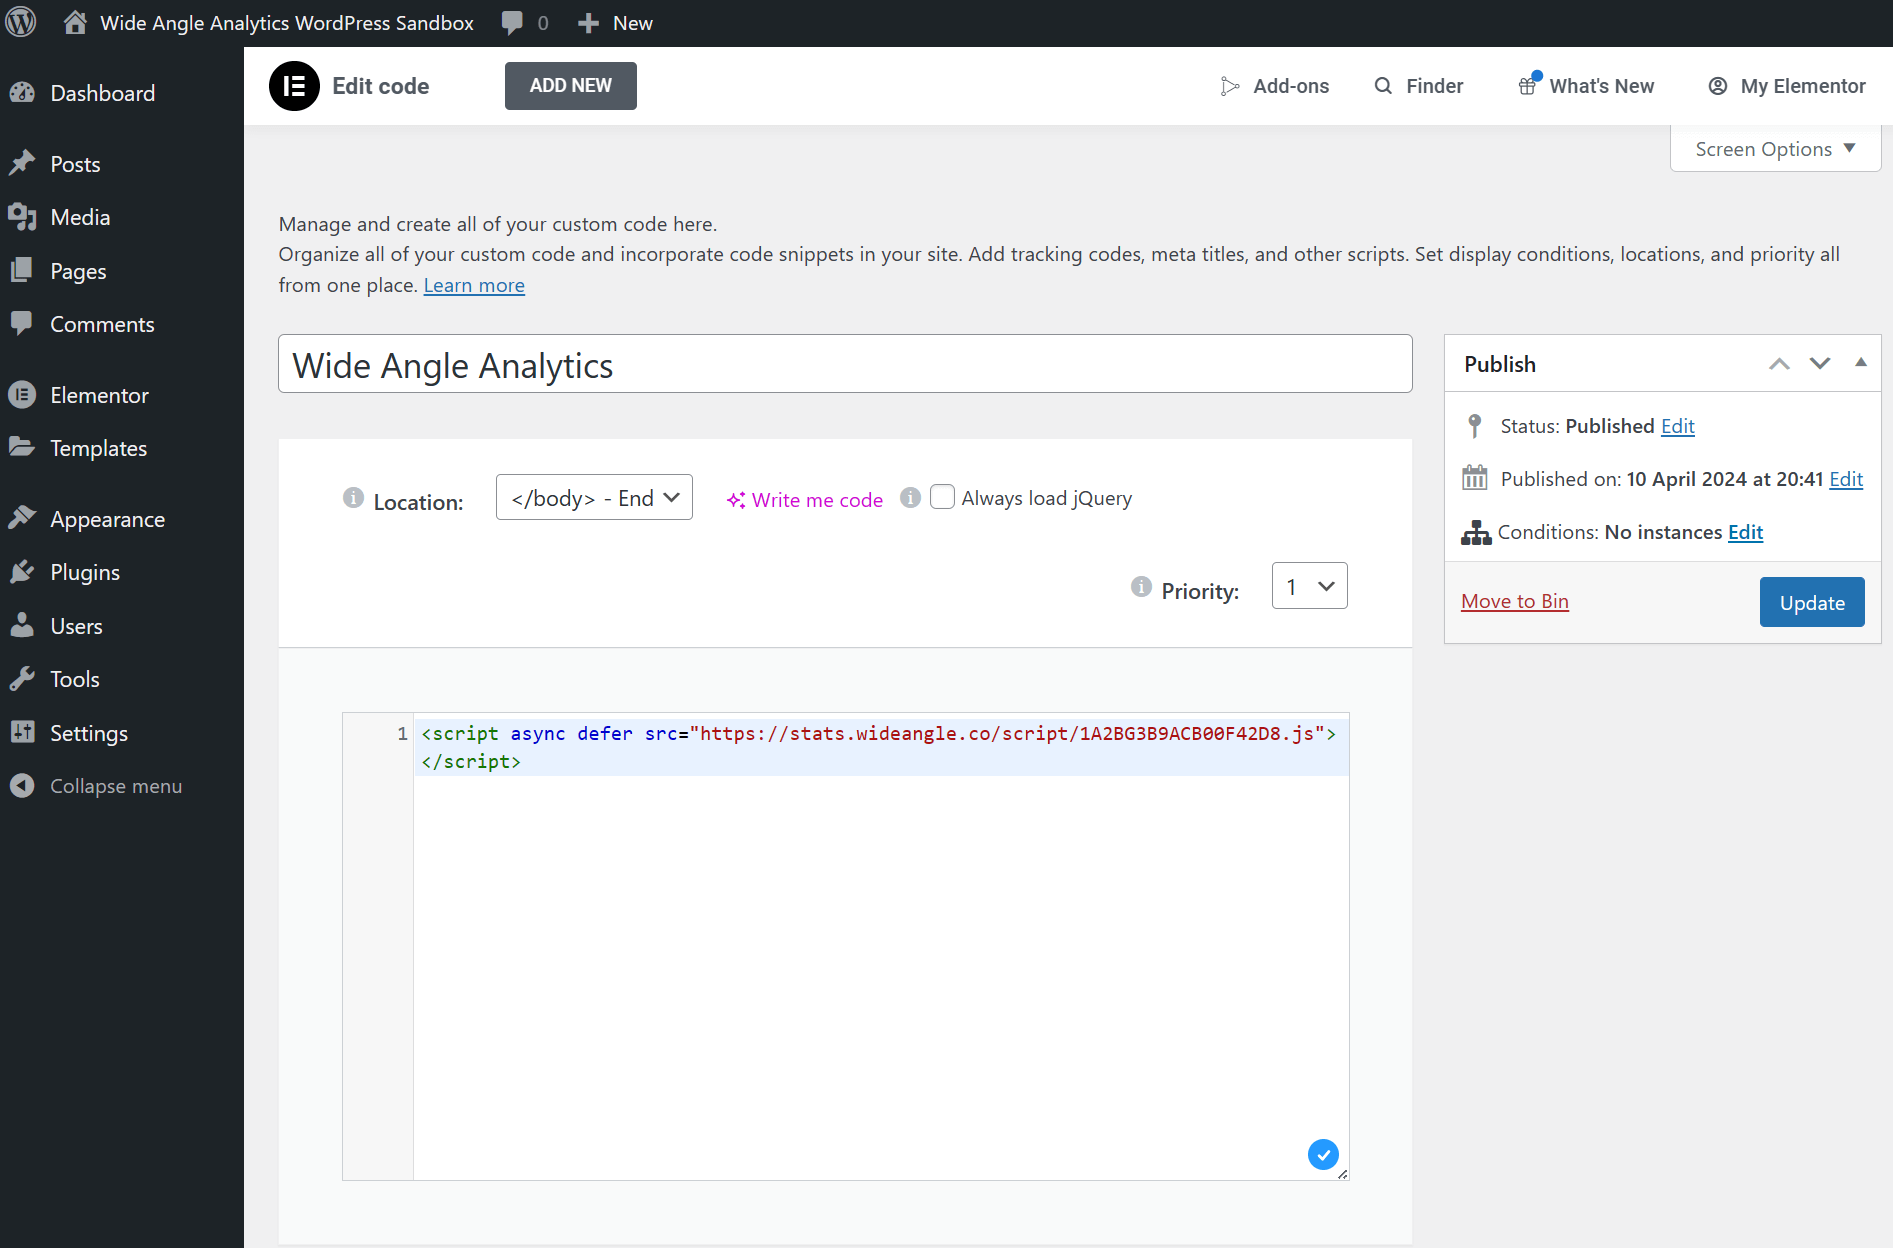 Custom code form screenshot - Web Analytics for Elementor the WordPress plugin